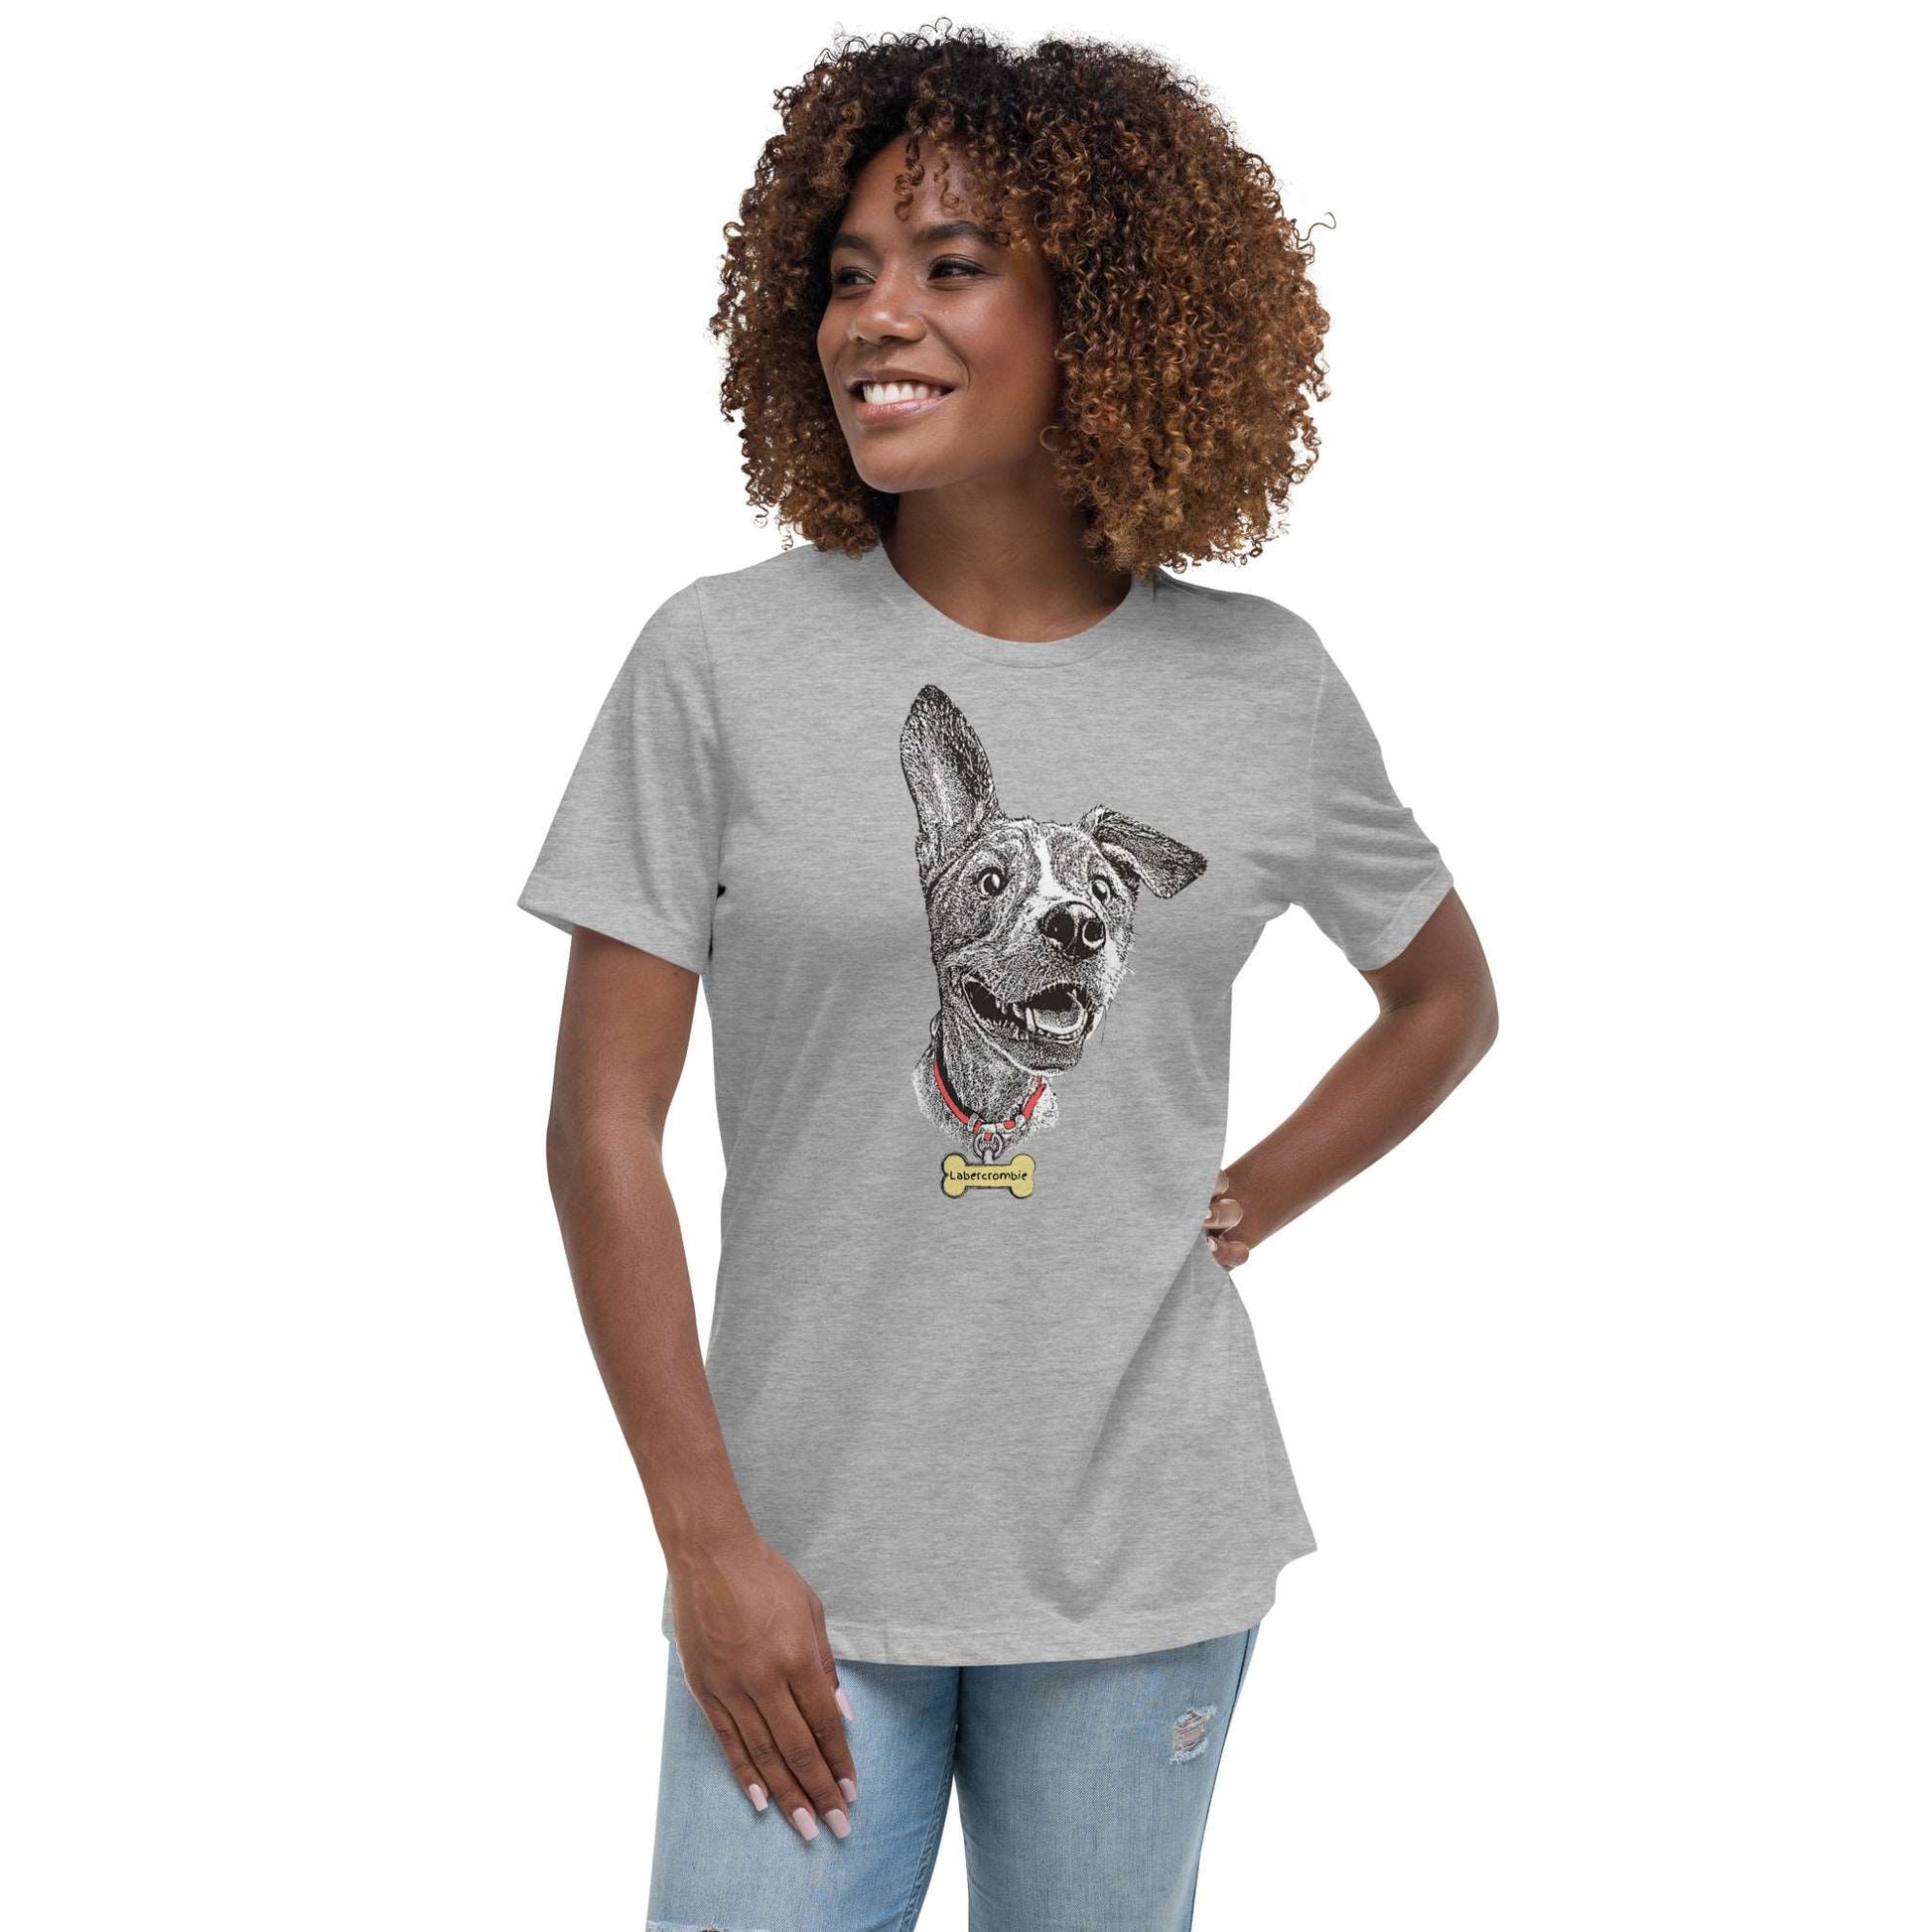 Floppy Eared Dog Women's Relaxed T-Shirt